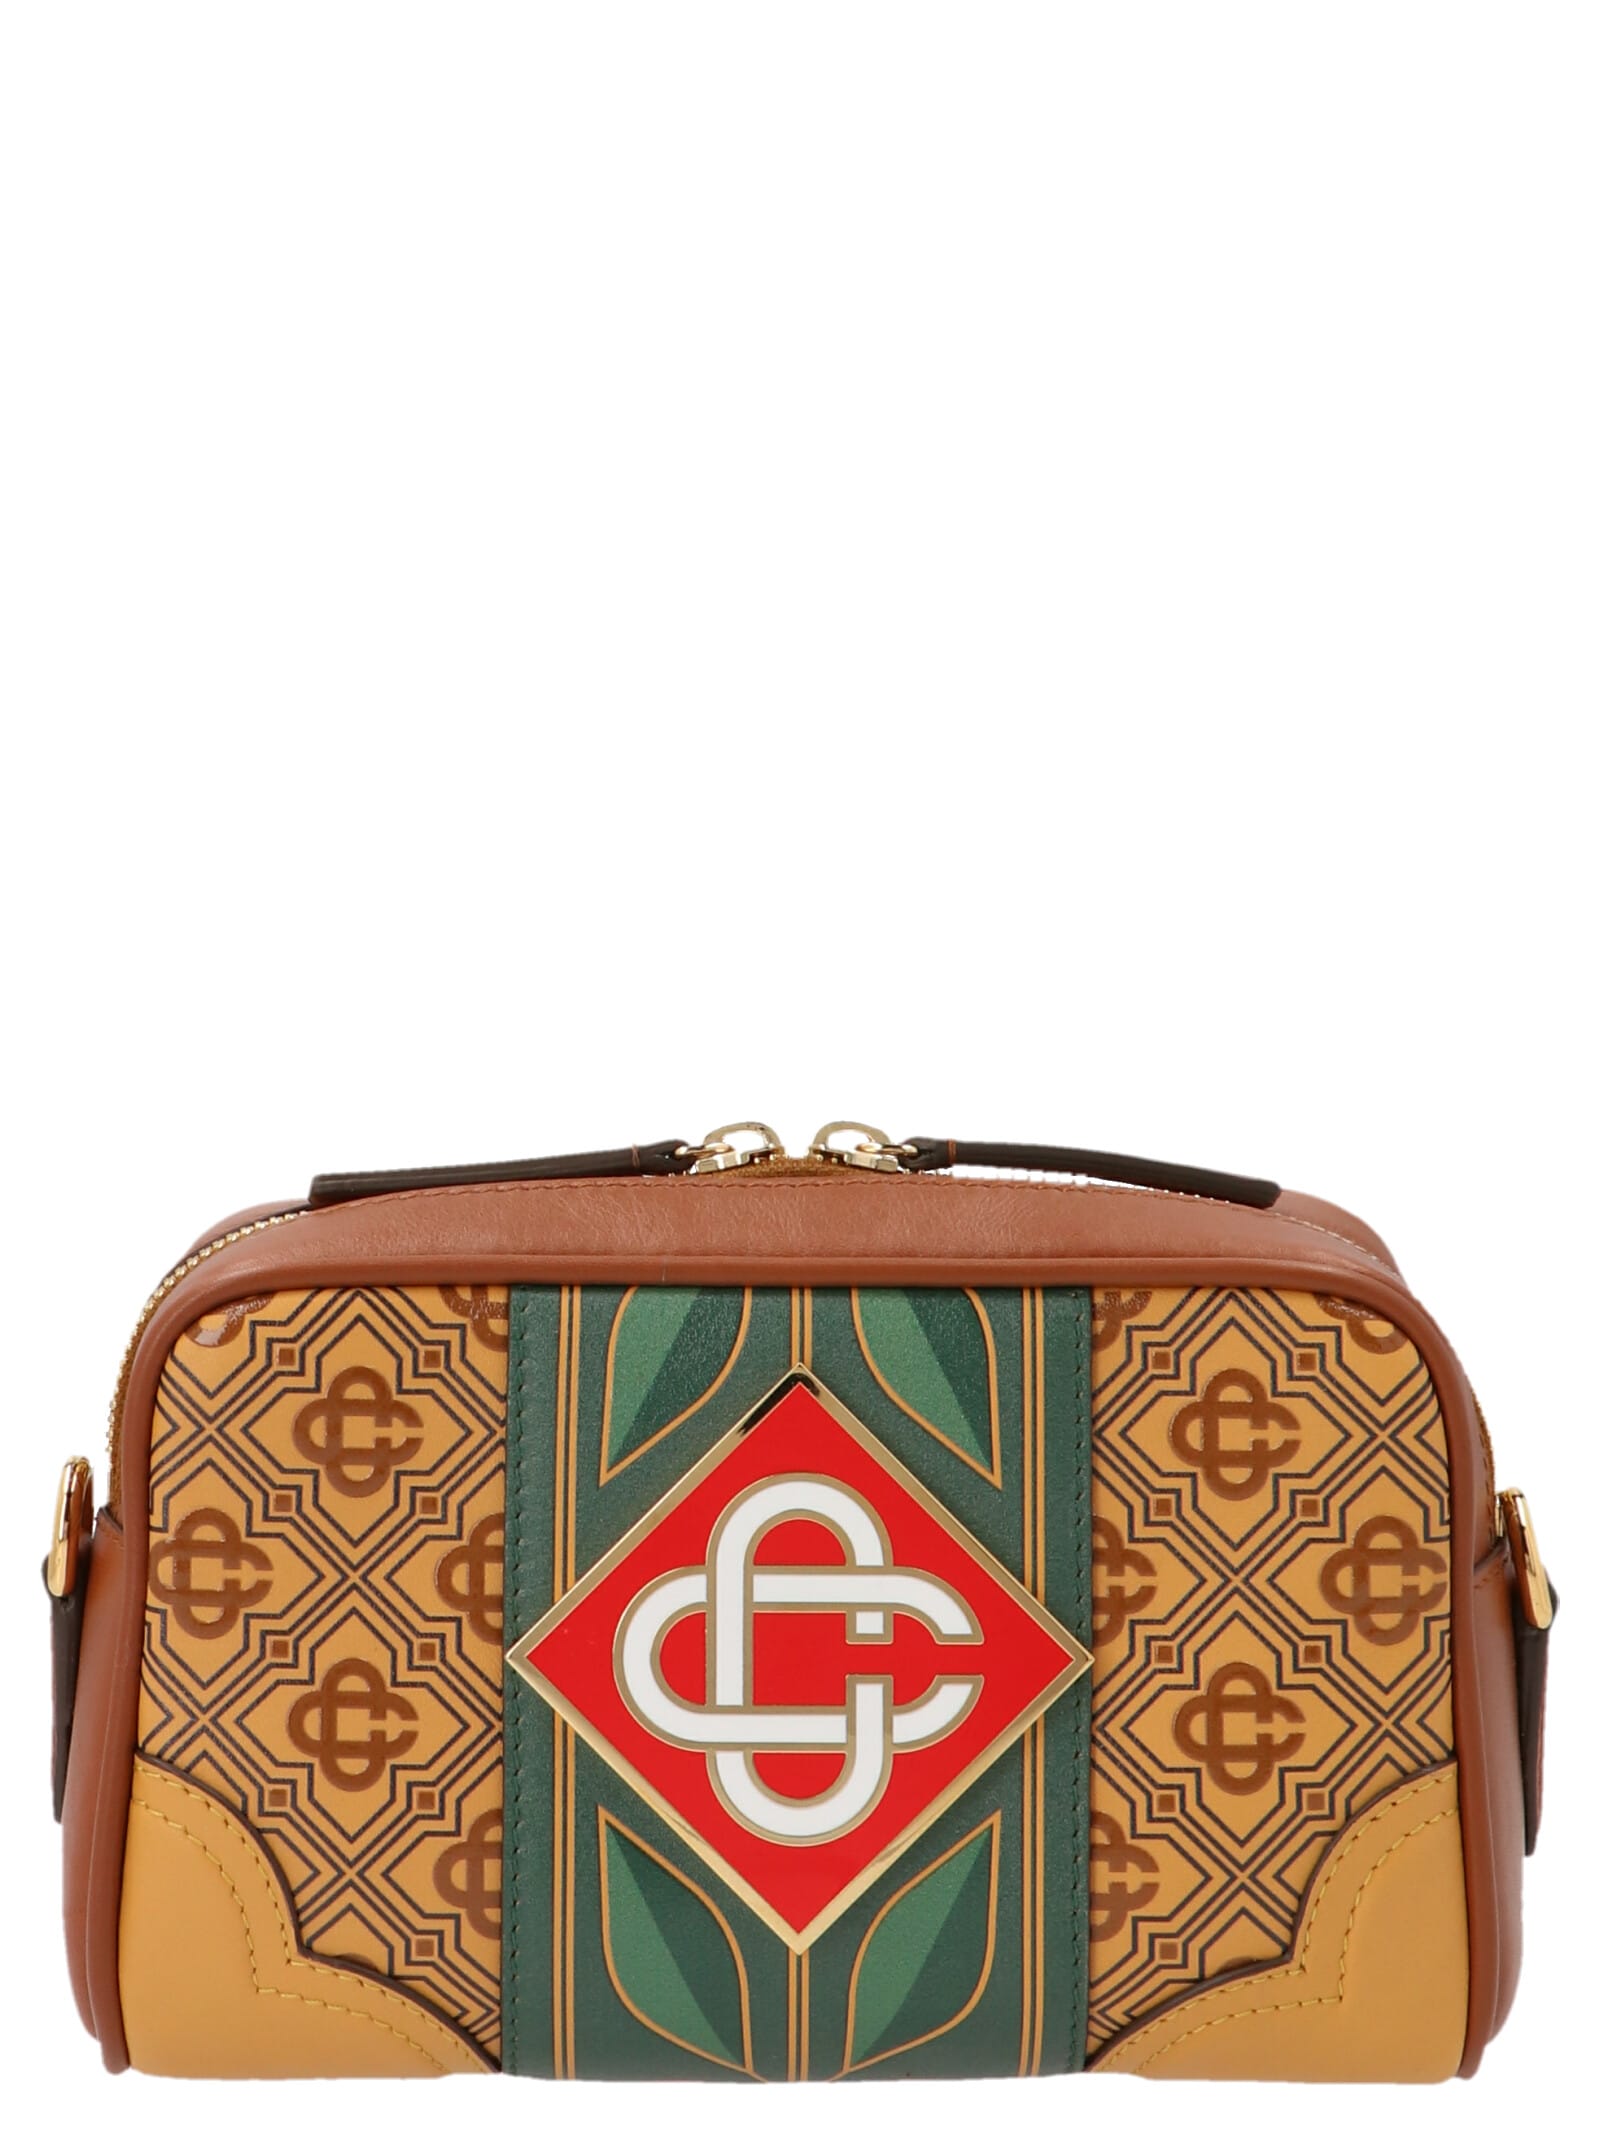 Casablanca monogram Bag